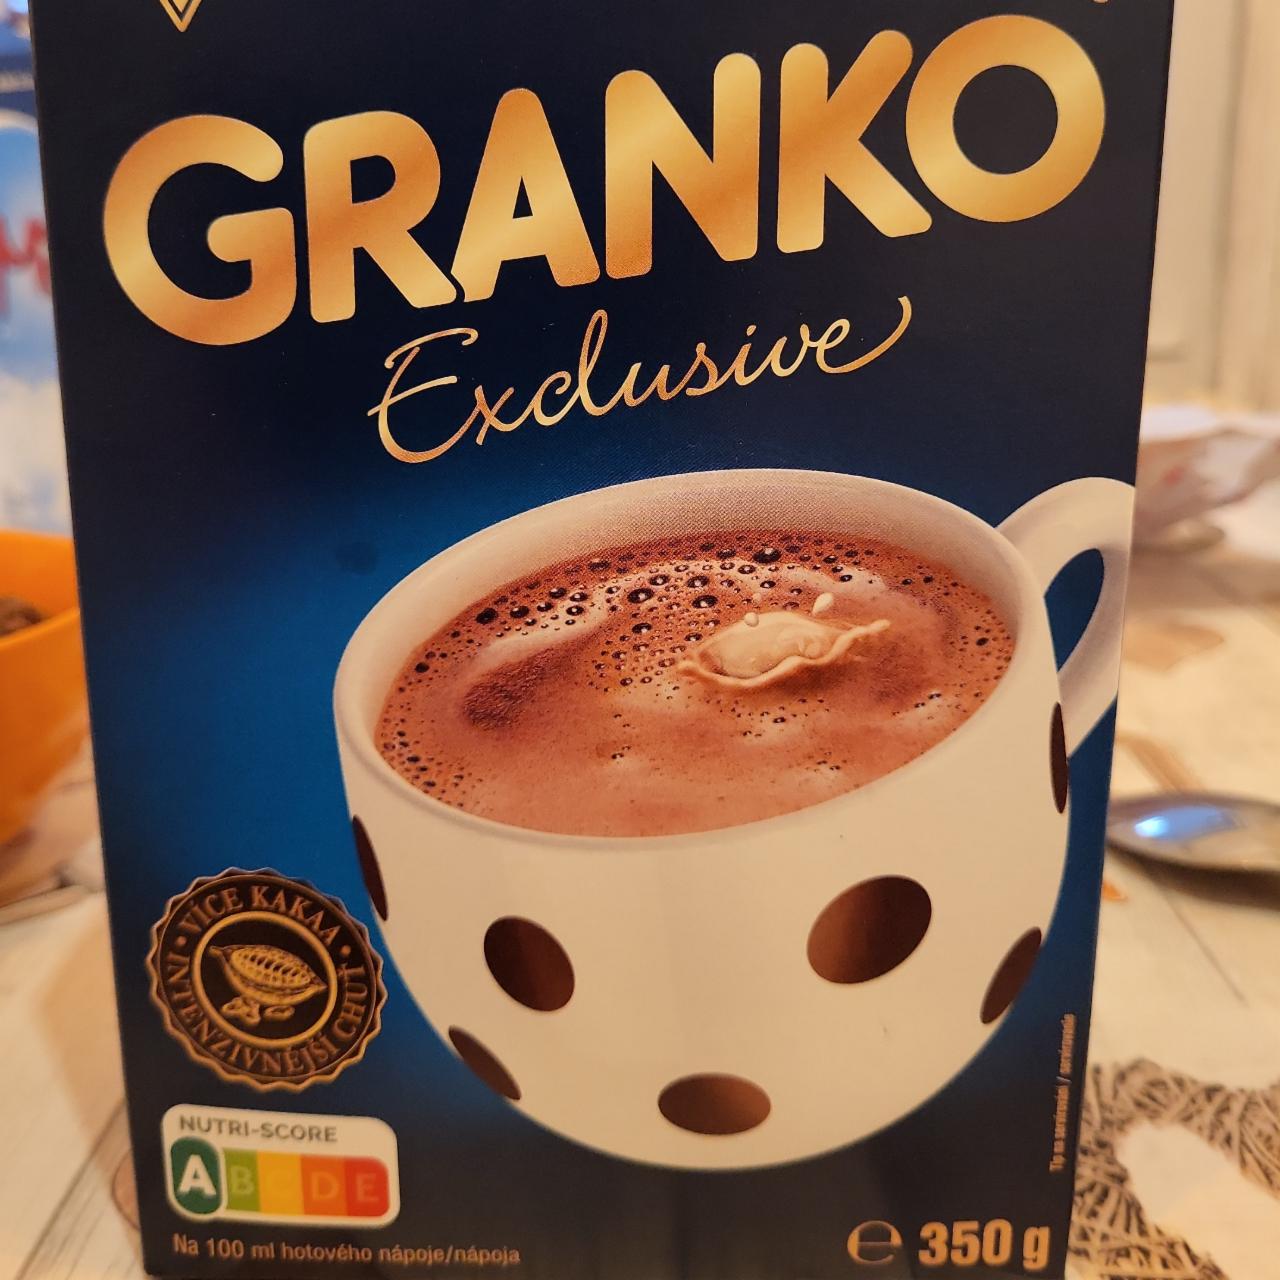 Képek - Granko Exclusive Orion